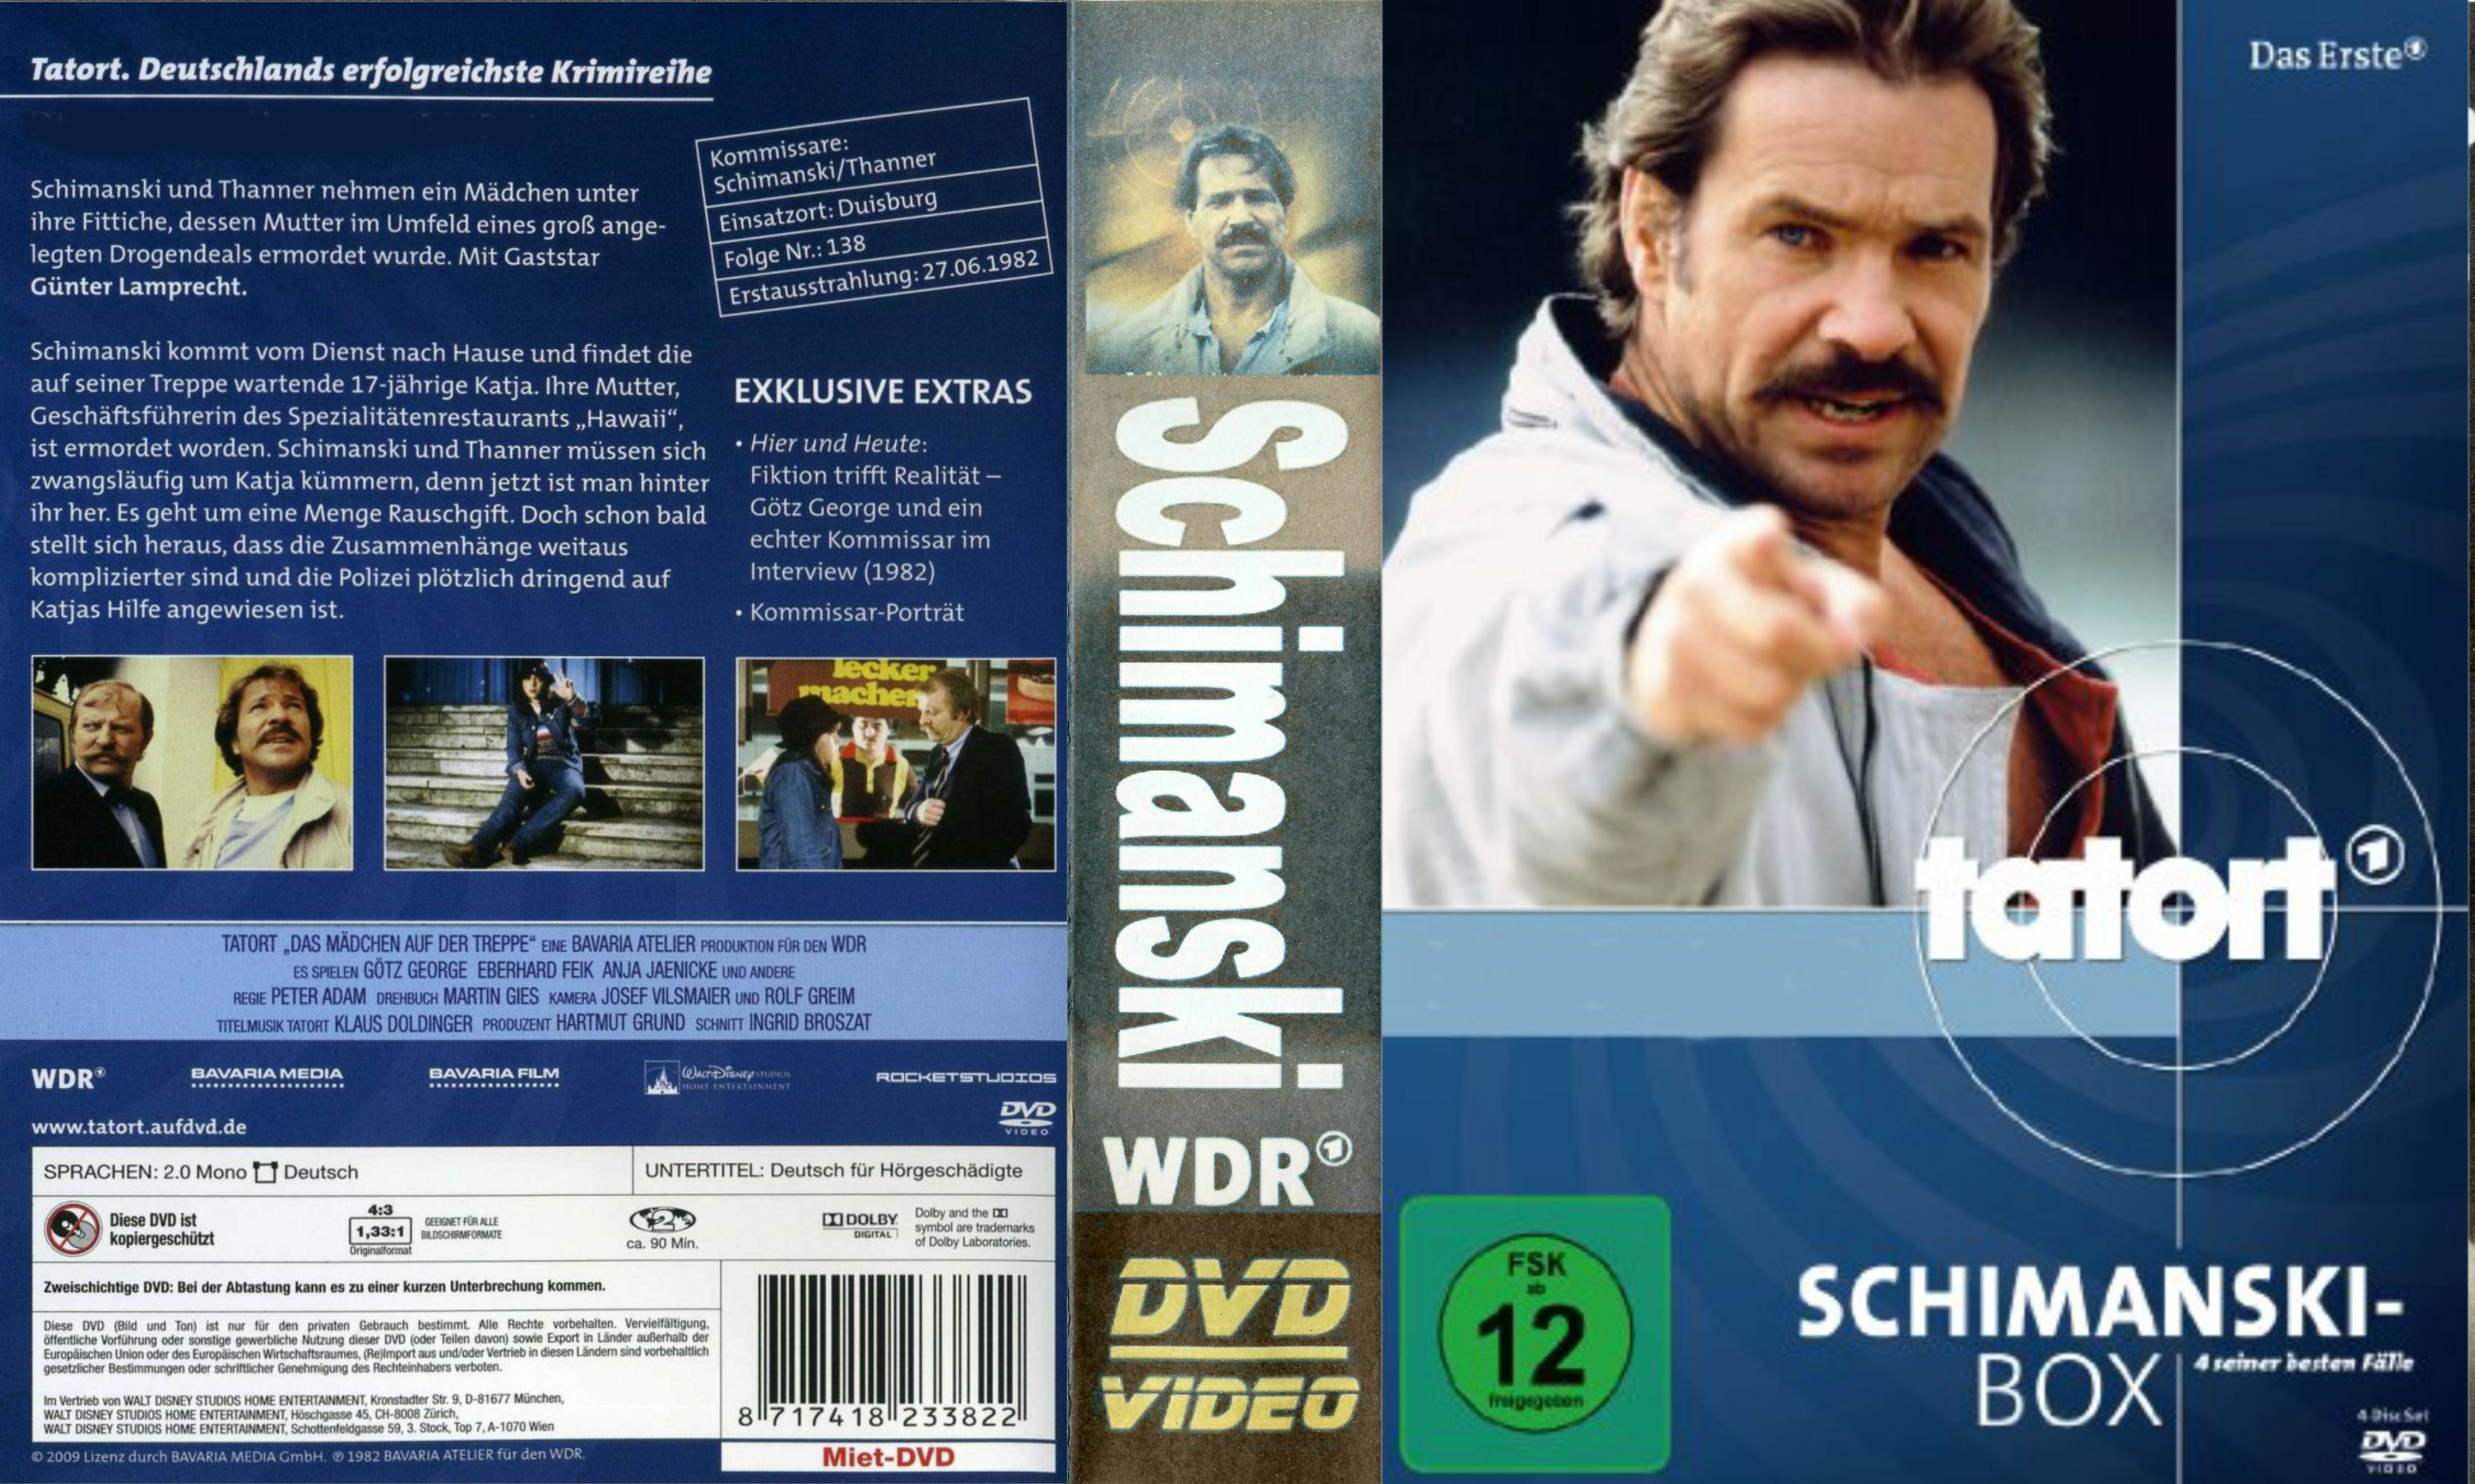 Schimanski Collectie Tatort No Subs - DvD 20